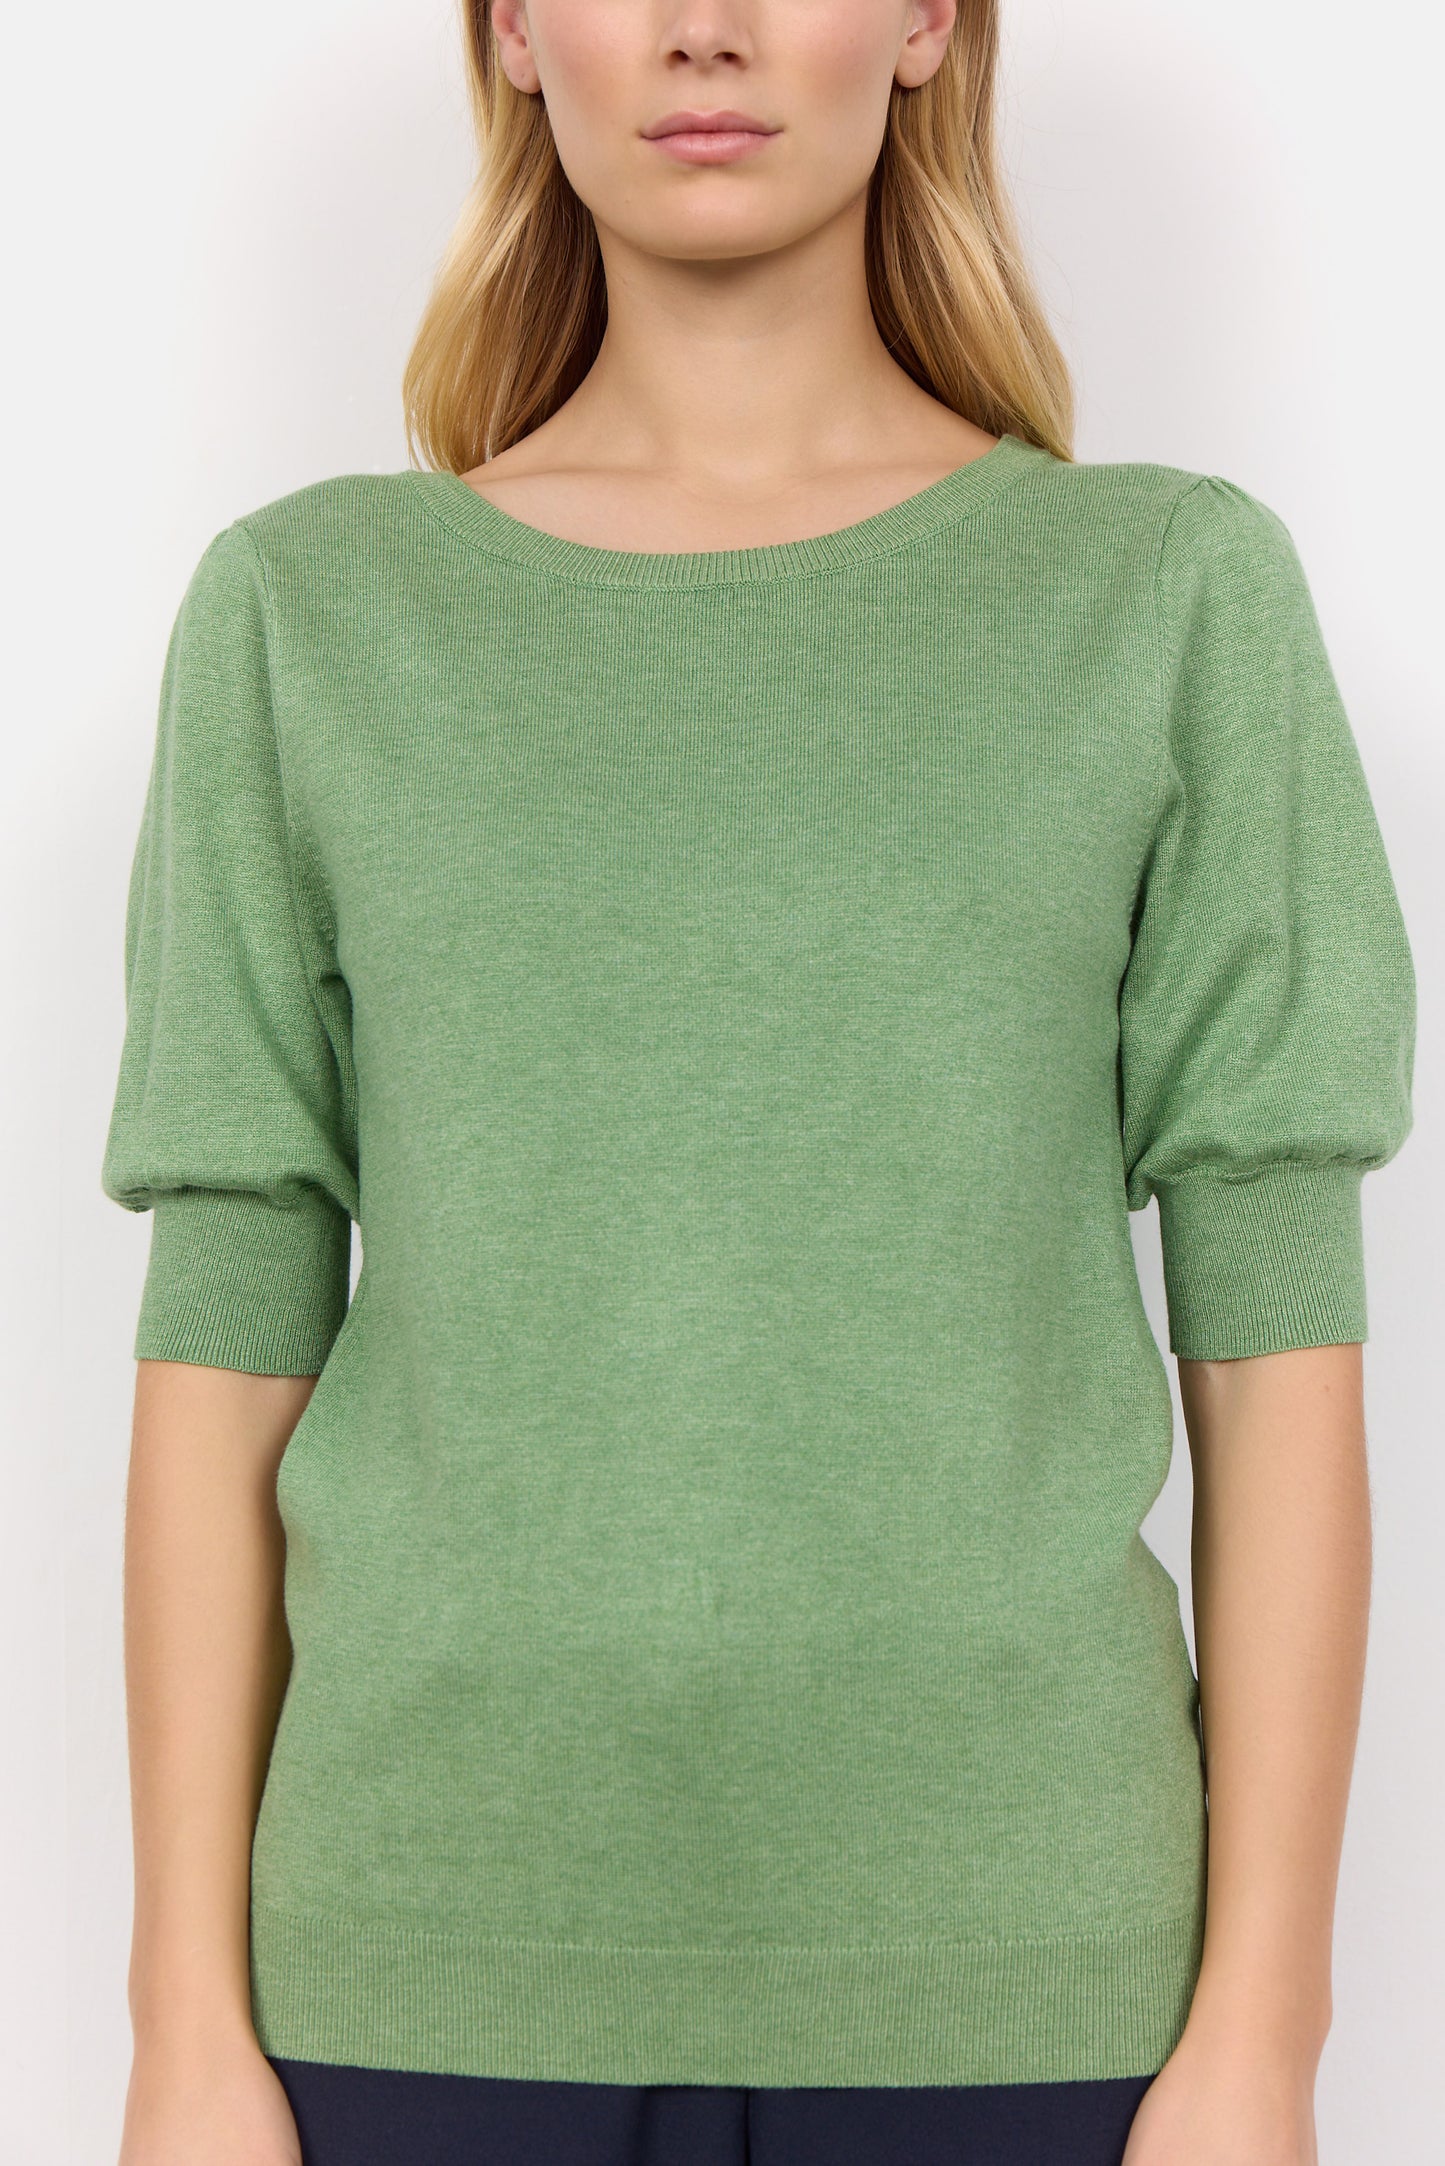 Soya Concept Green Short Sleeve Dollie Pullover